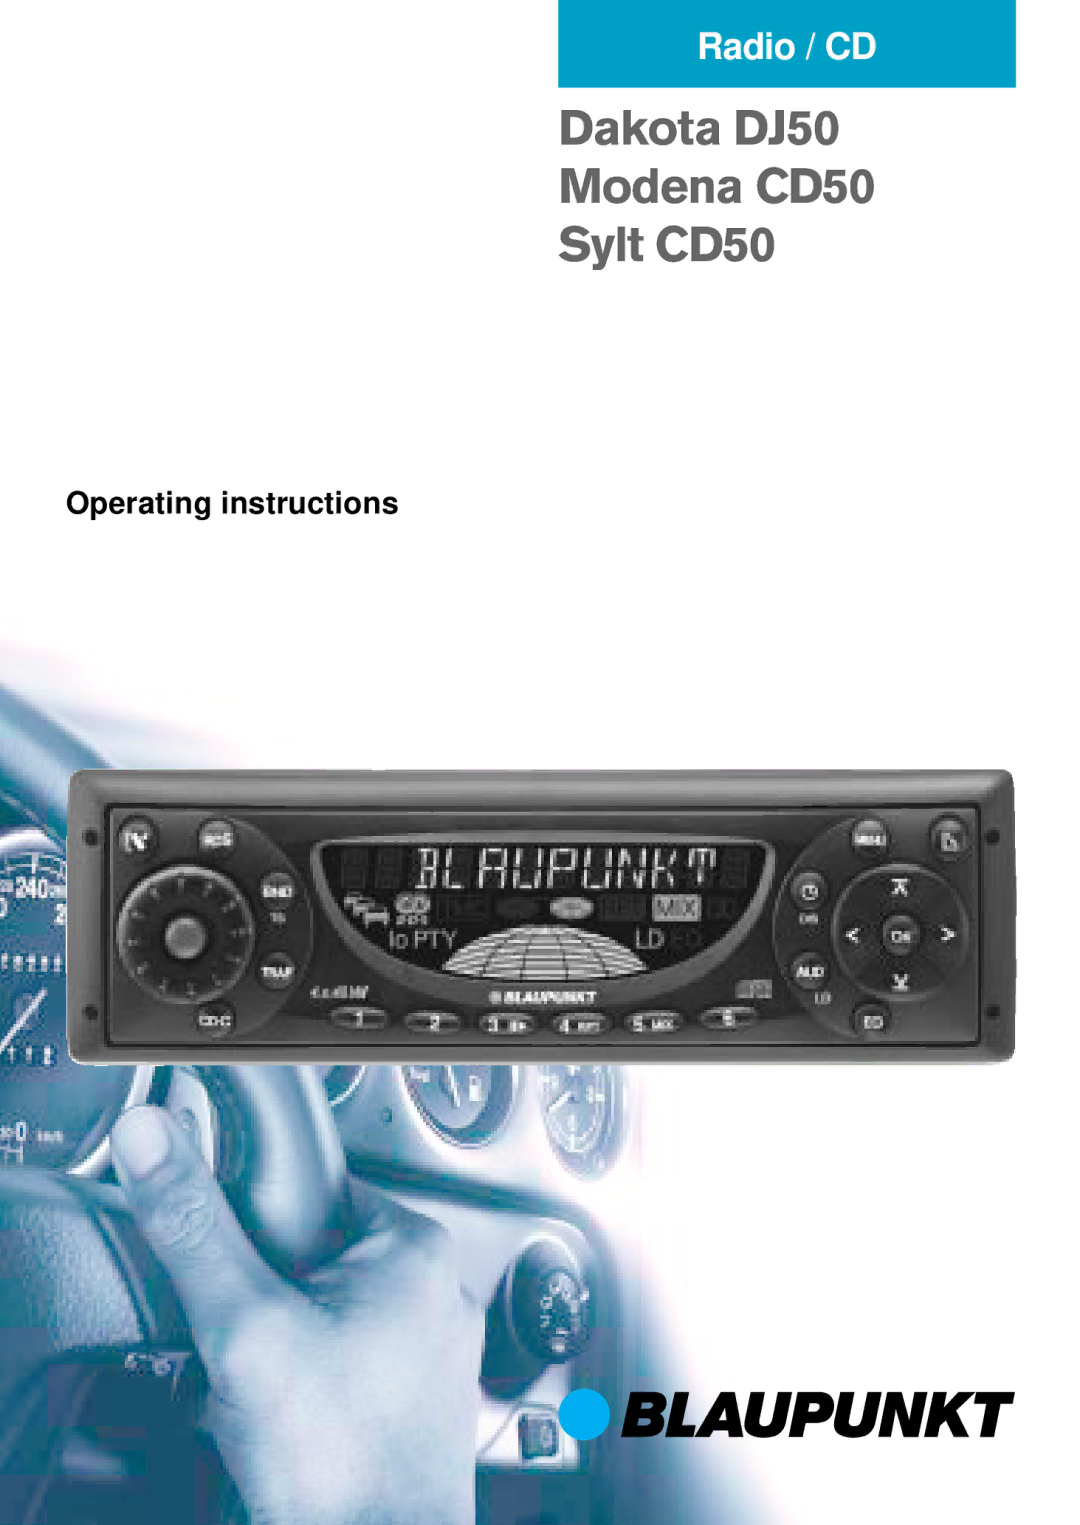 Blaupunkt MODENA CD50 operating instructions Dakota DJ50 Modena CD50 Sylt CD50 